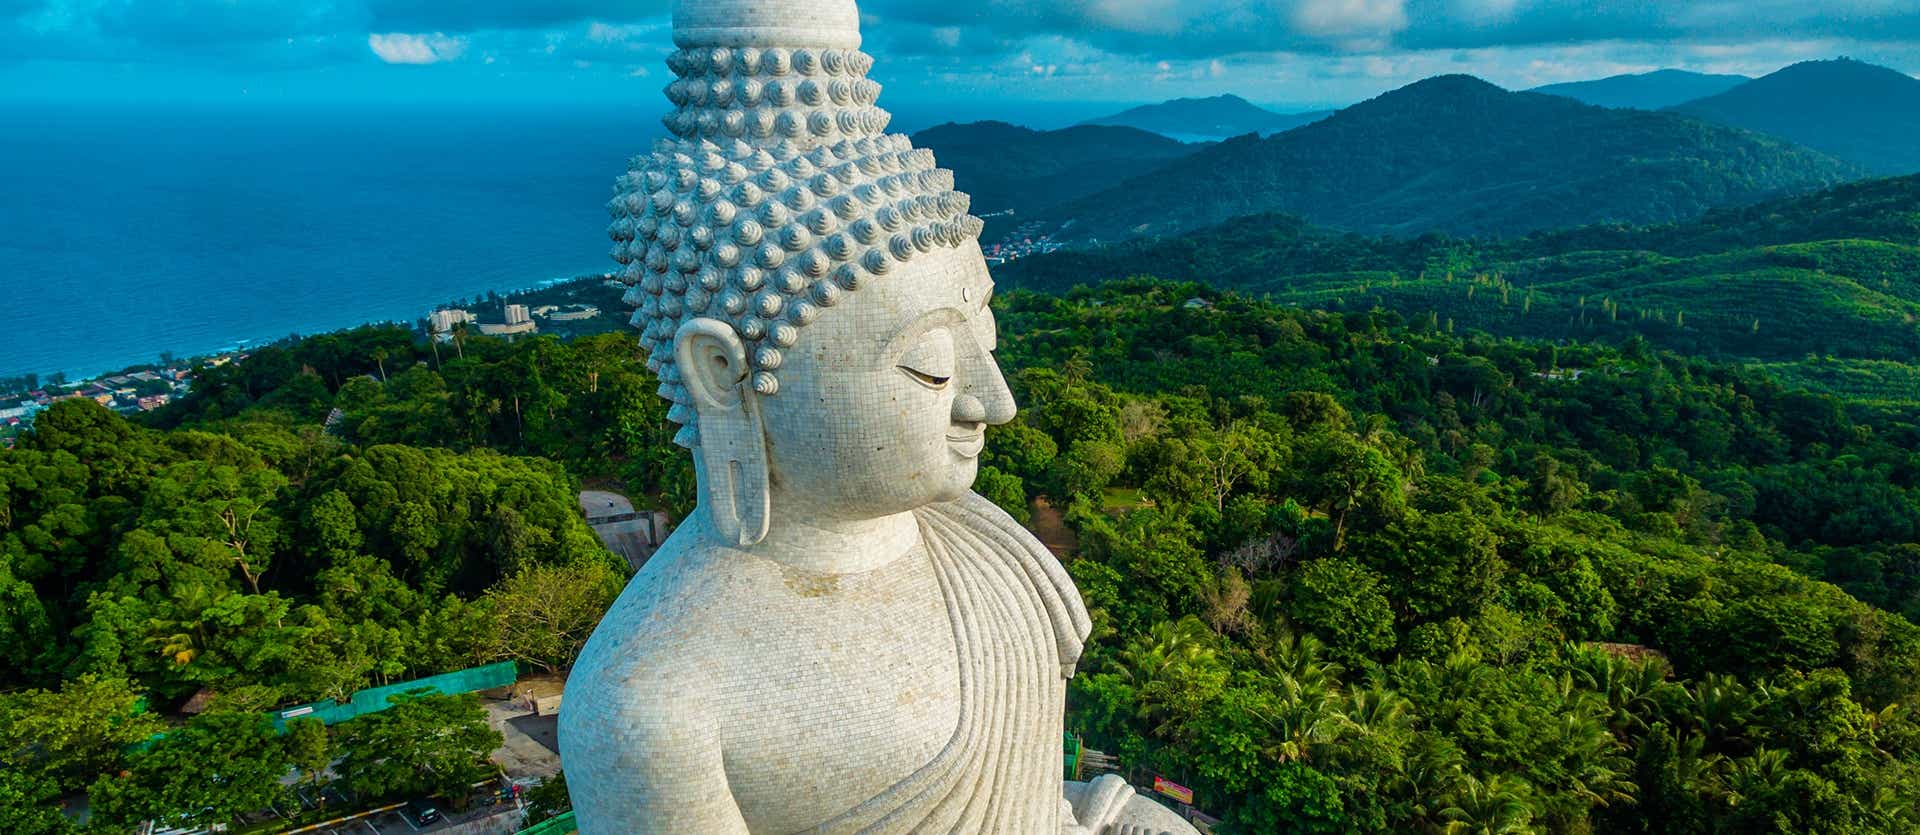 The Great Buddha of Phuket <span class="iconos separador"></span> Thailand 